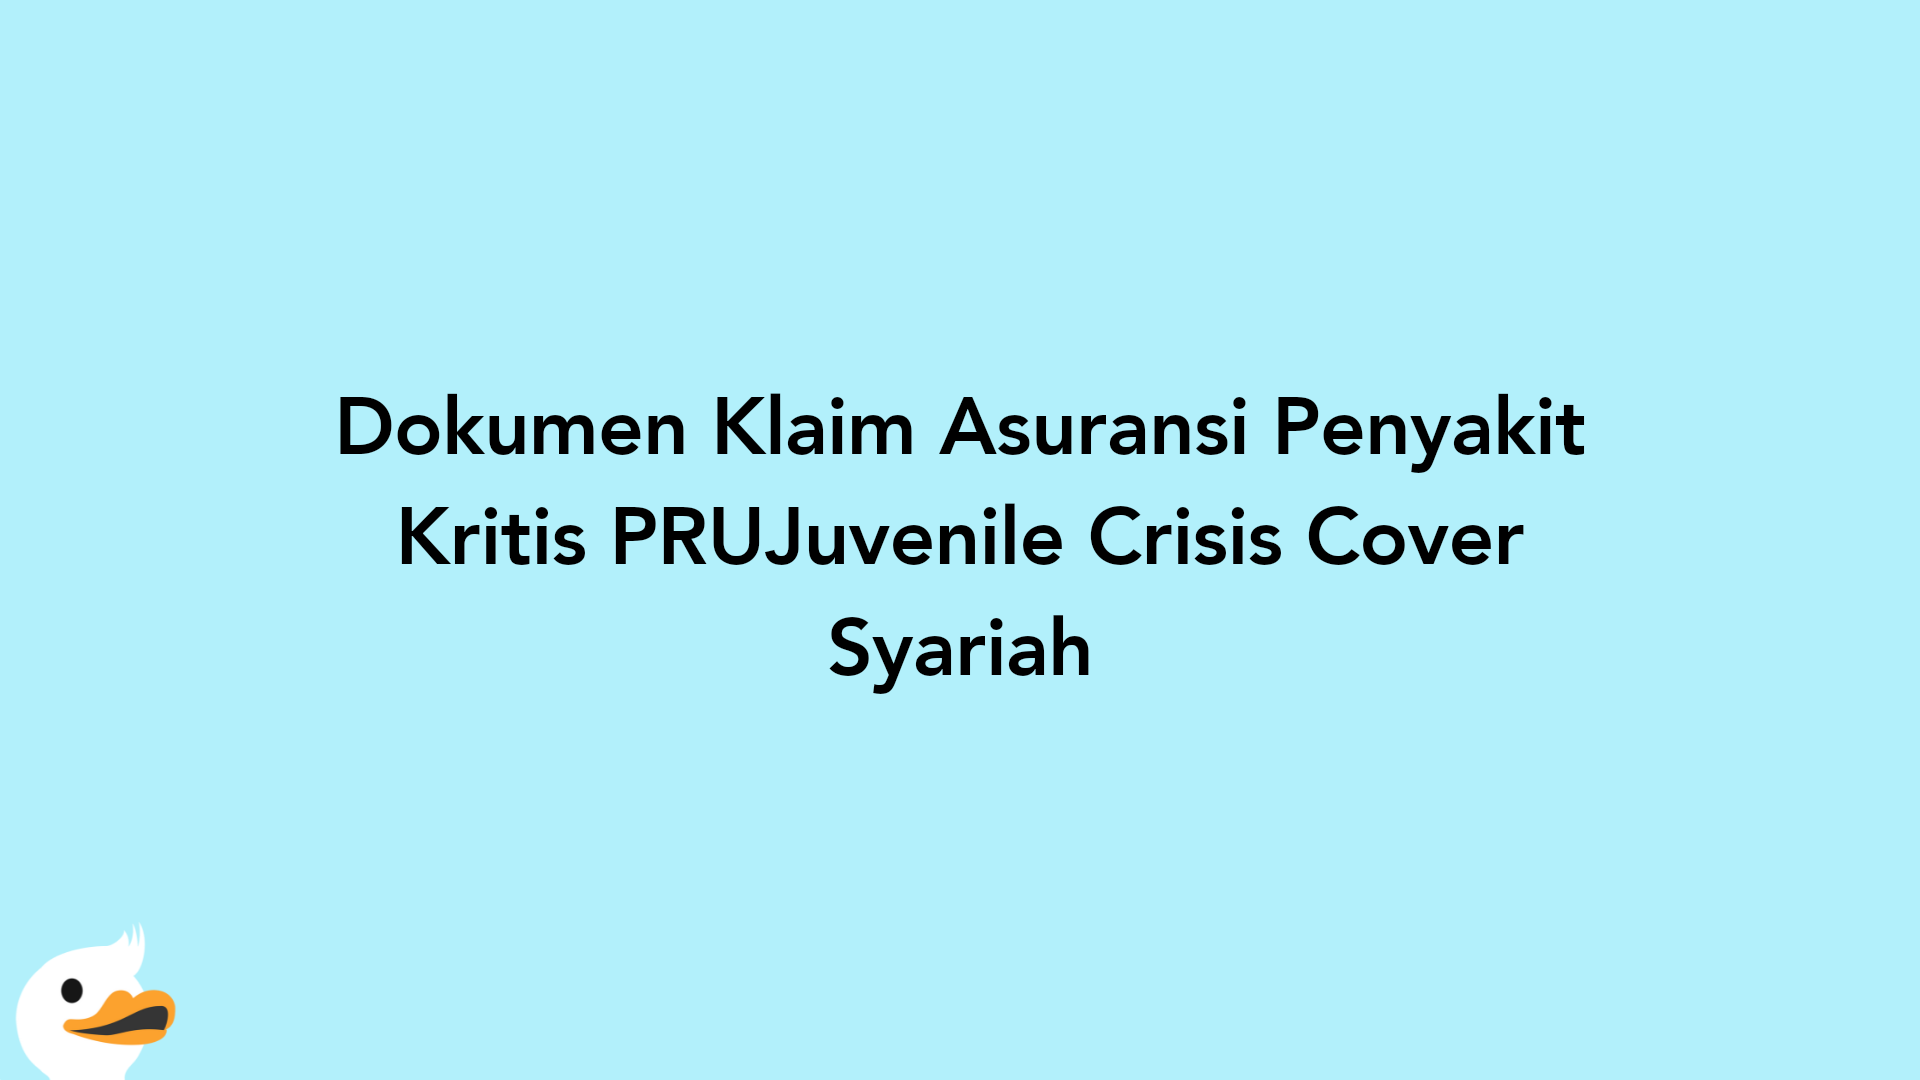 Dokumen Klaim Asuransi Penyakit Kritis PRUJuvenile Crisis Cover Syariah